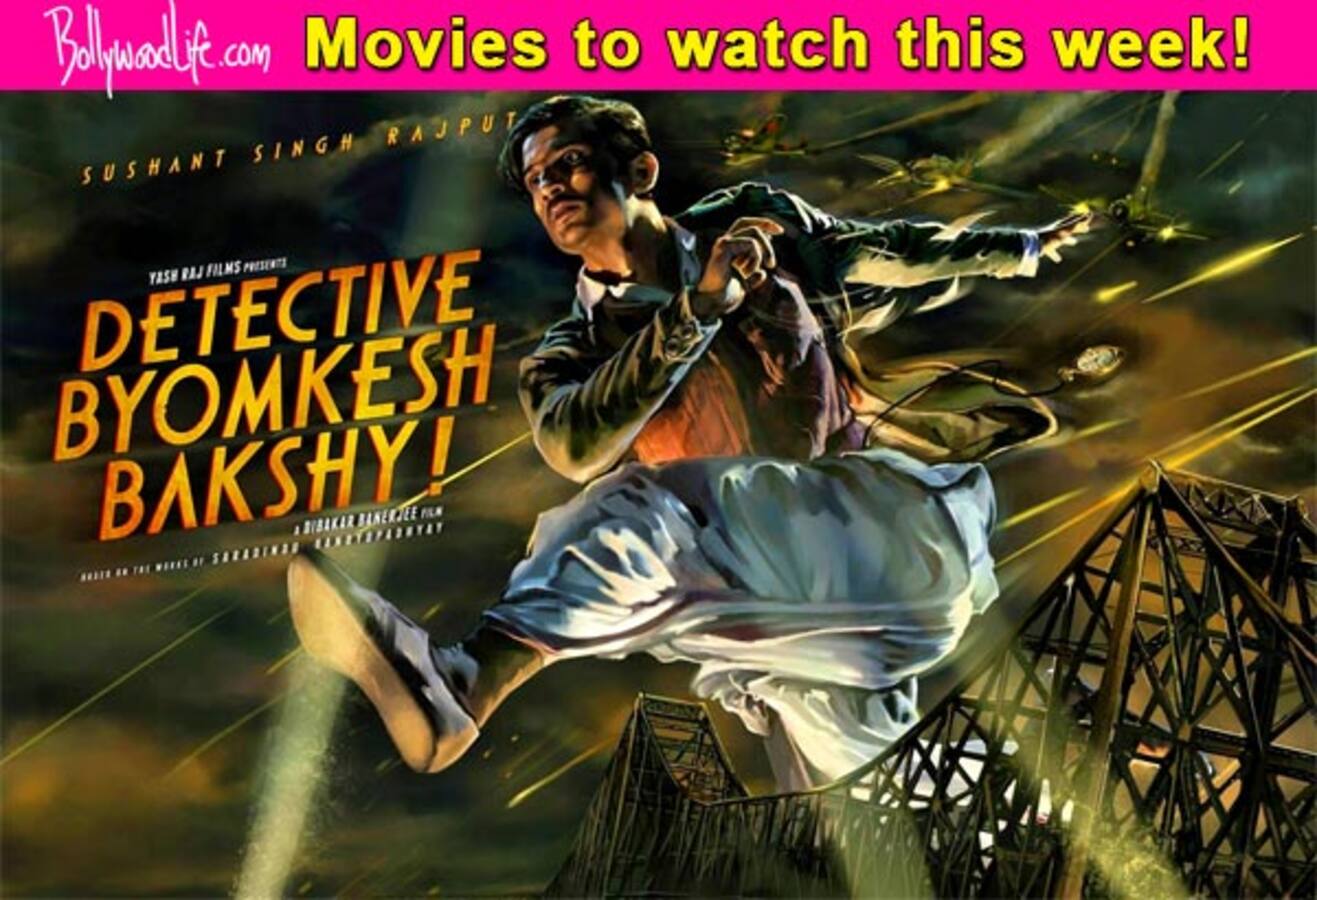 Movies to watch this week: Detective Byomkesh Bakshy!